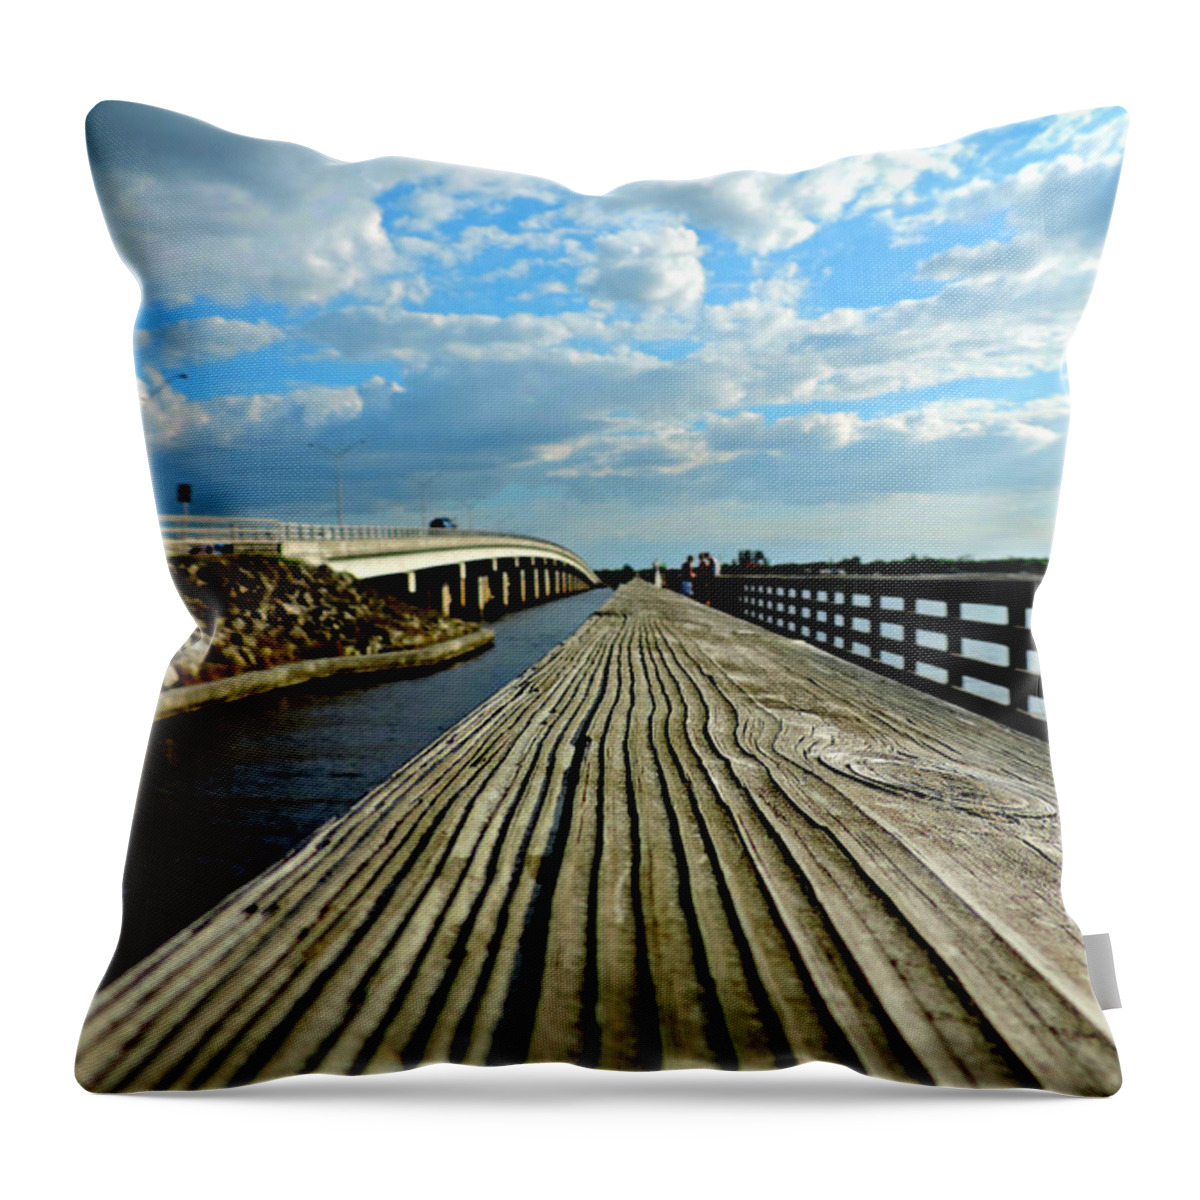 Fishing Pier Throw Pillow featuring the digital art Fishing Pier by Alison Belsan Horton